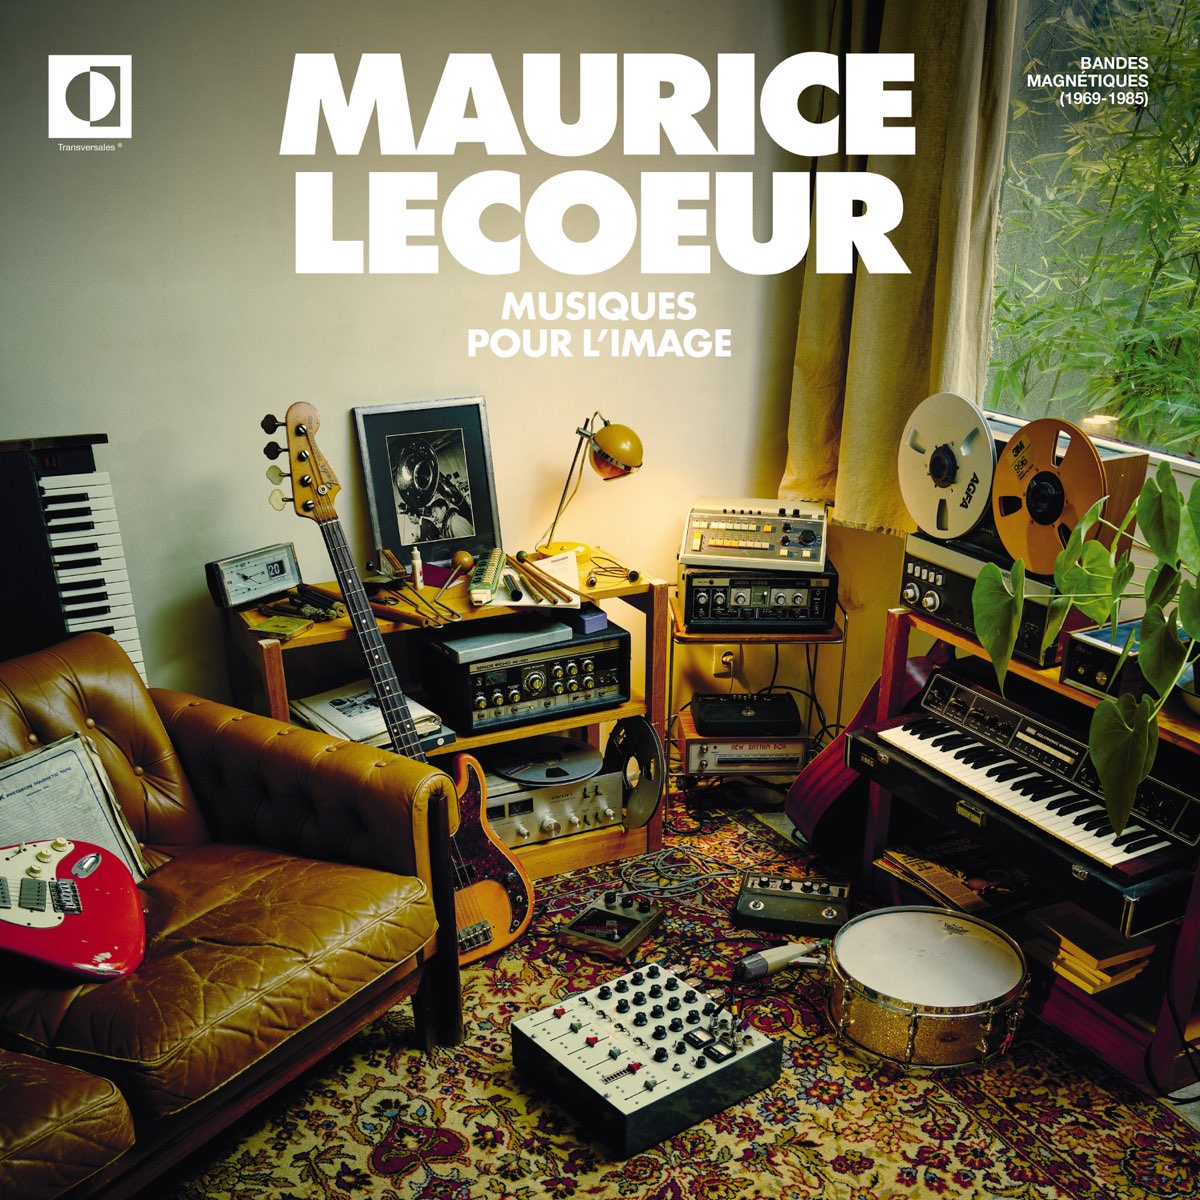 Musiques pour l'image (1969-1985) by Maurice Lecoeur on Apple Music